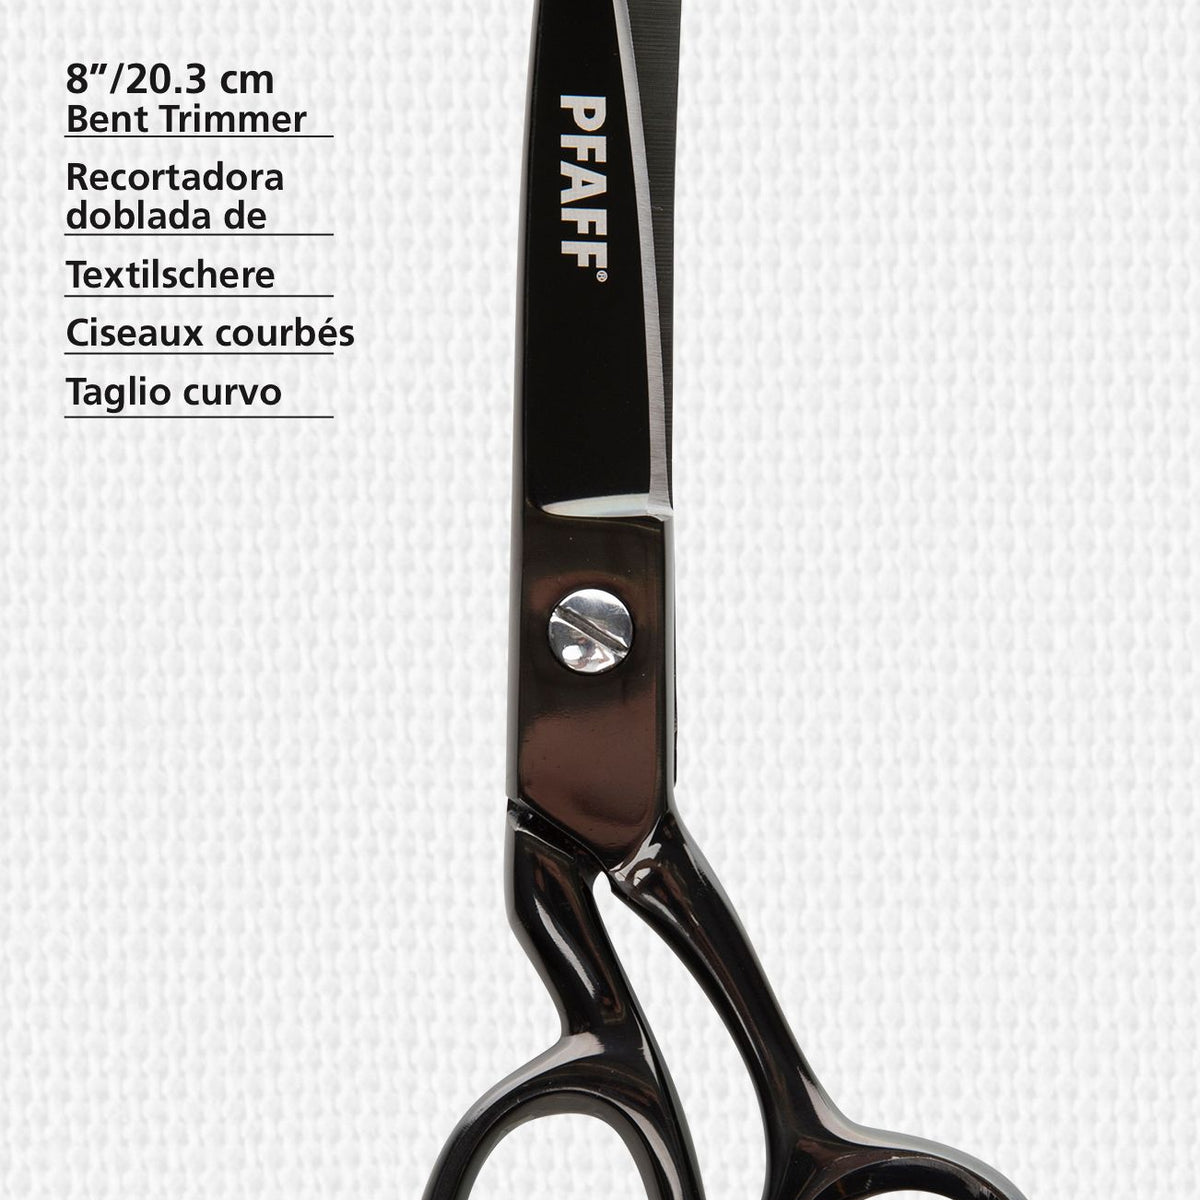 Pfaff 20.3cm Bent Trimmer Scissors